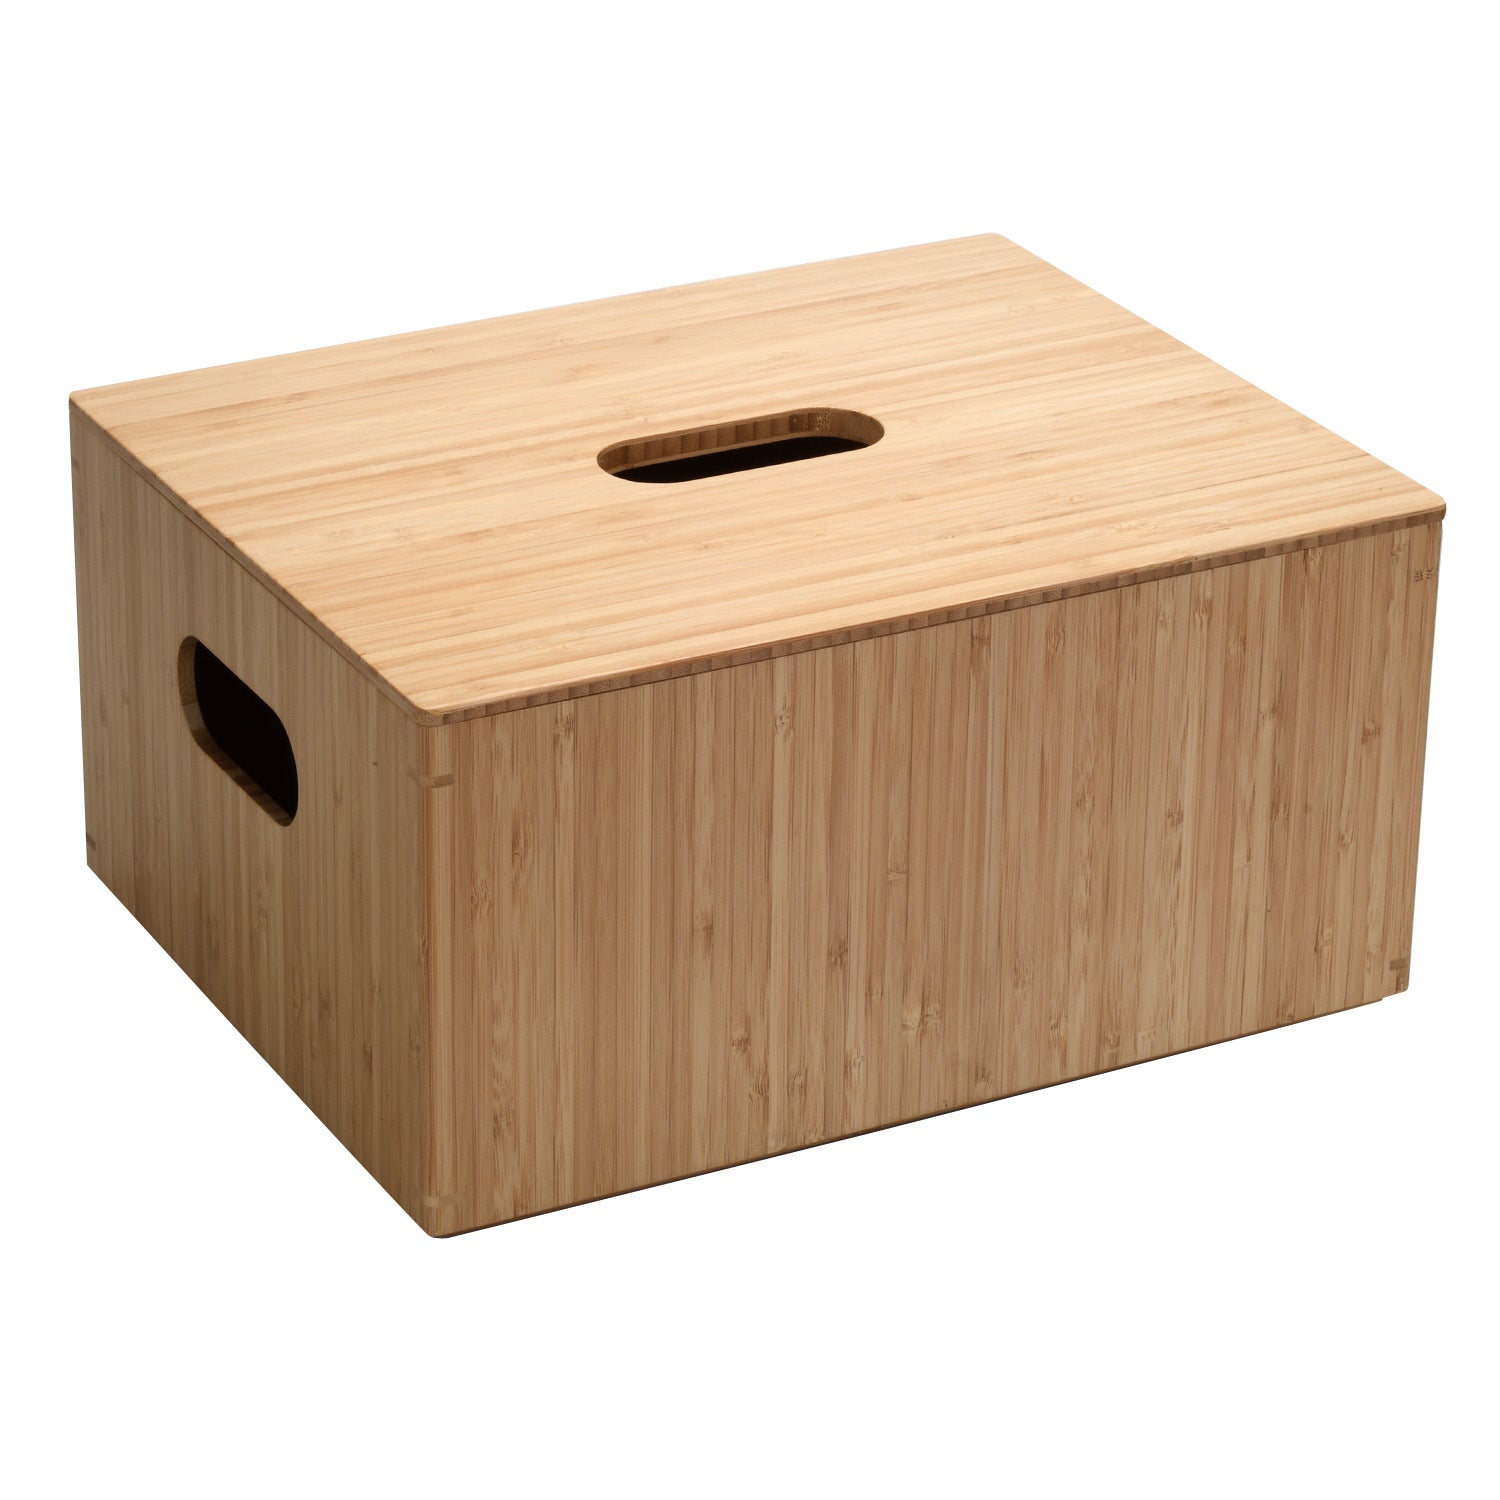 Bamboo Large Storage Box 14 x 11 x 6.5 - MobilevisionUS